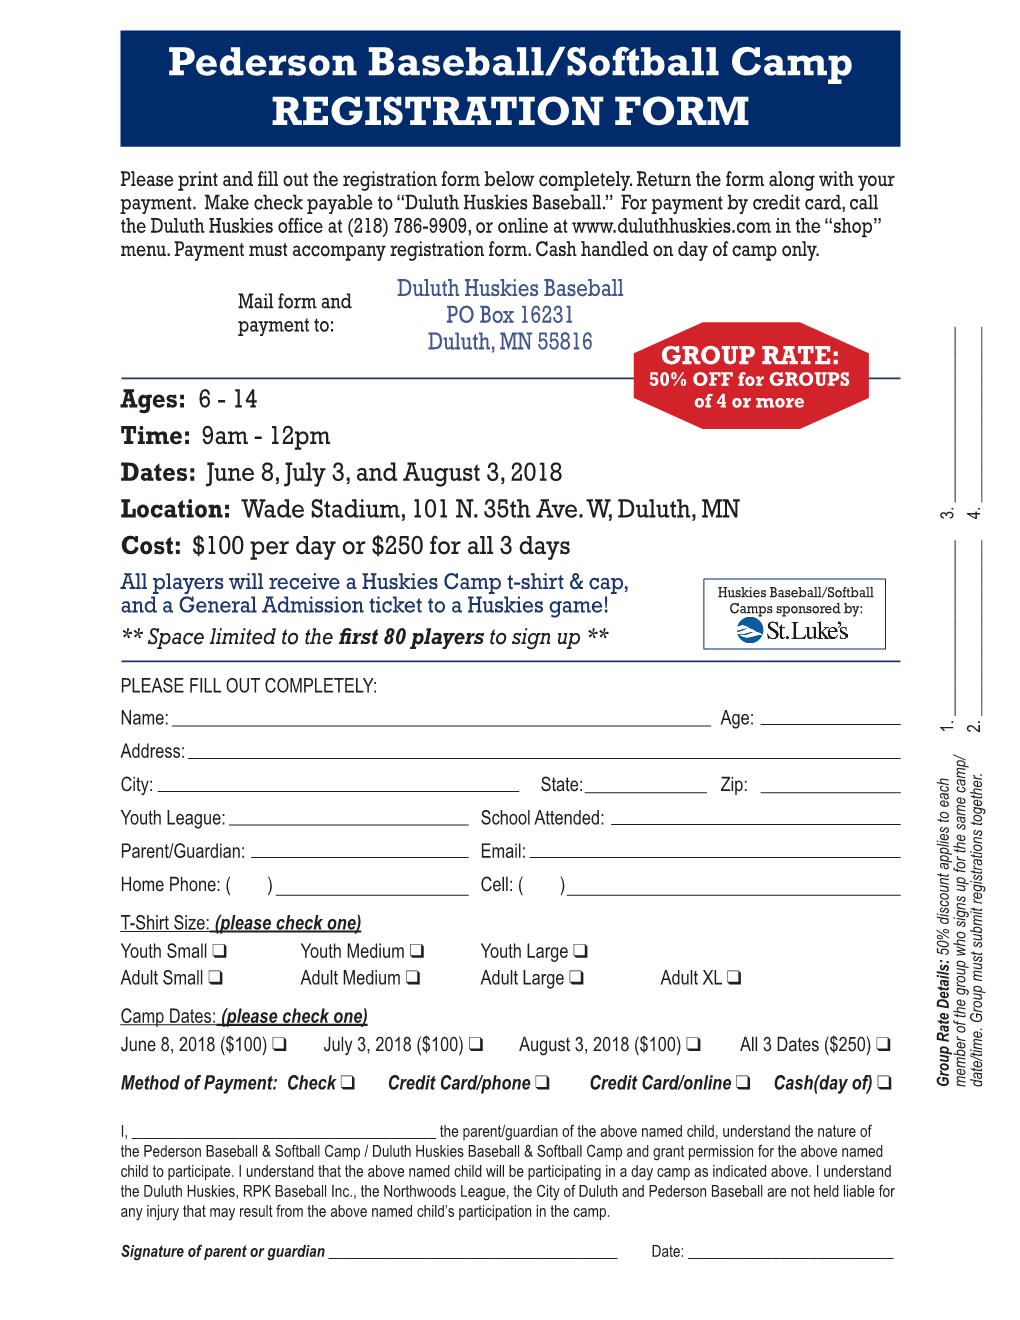 Pederson Baseball/Softball Camp Registration Form